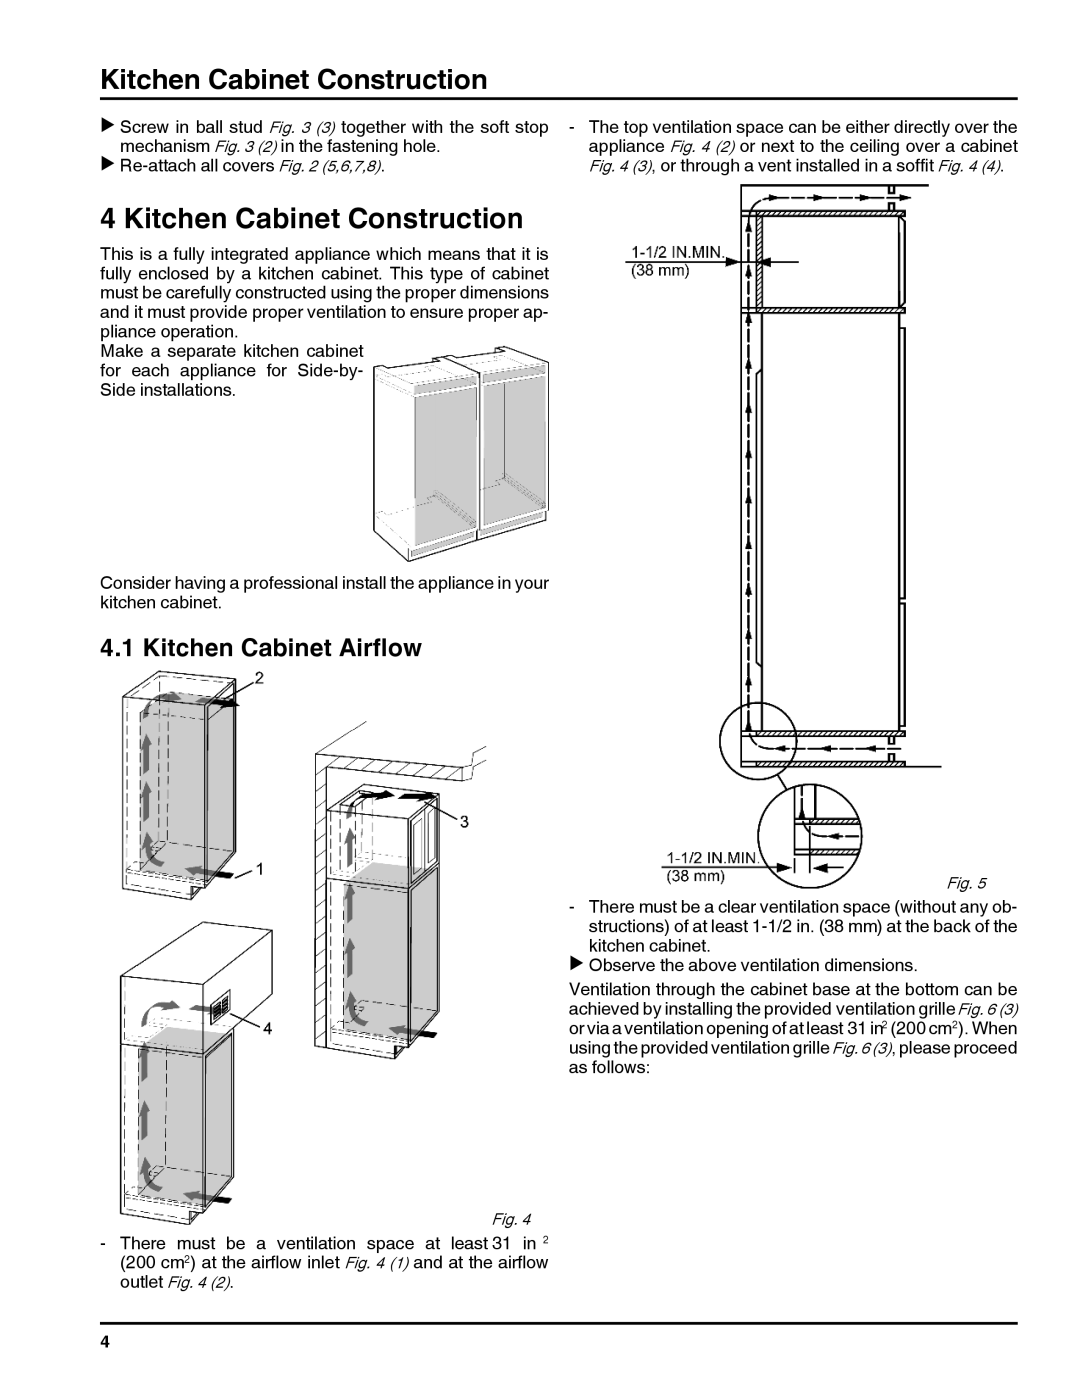 Liebherr HC1011, HC1060 installation instructions Kitchen Cabinet Construction, Kitchen Cabinet Airflow 